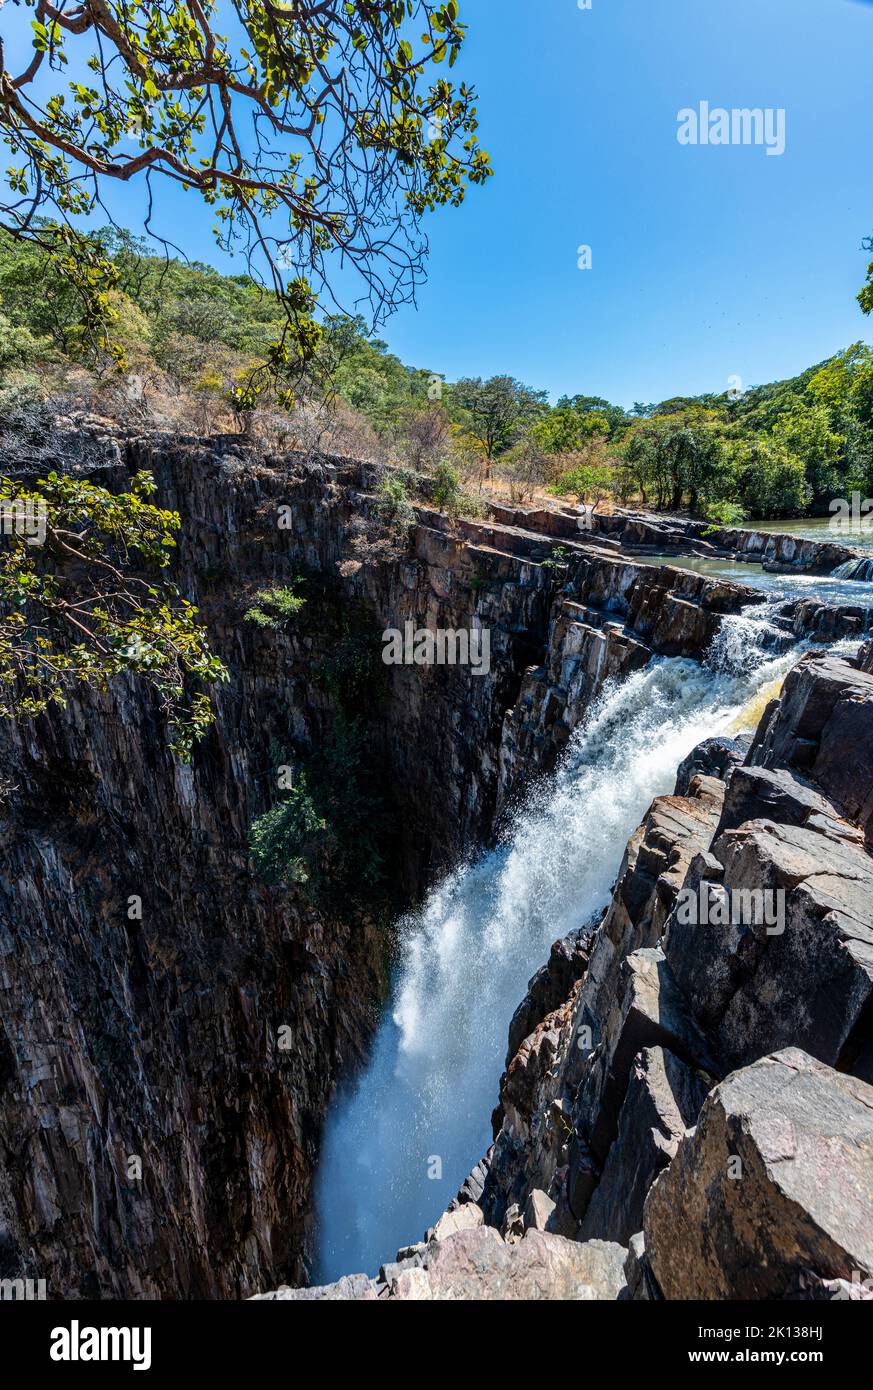 Kalambo falls, border between Zambia and Tanzania, Africa Stock Photo